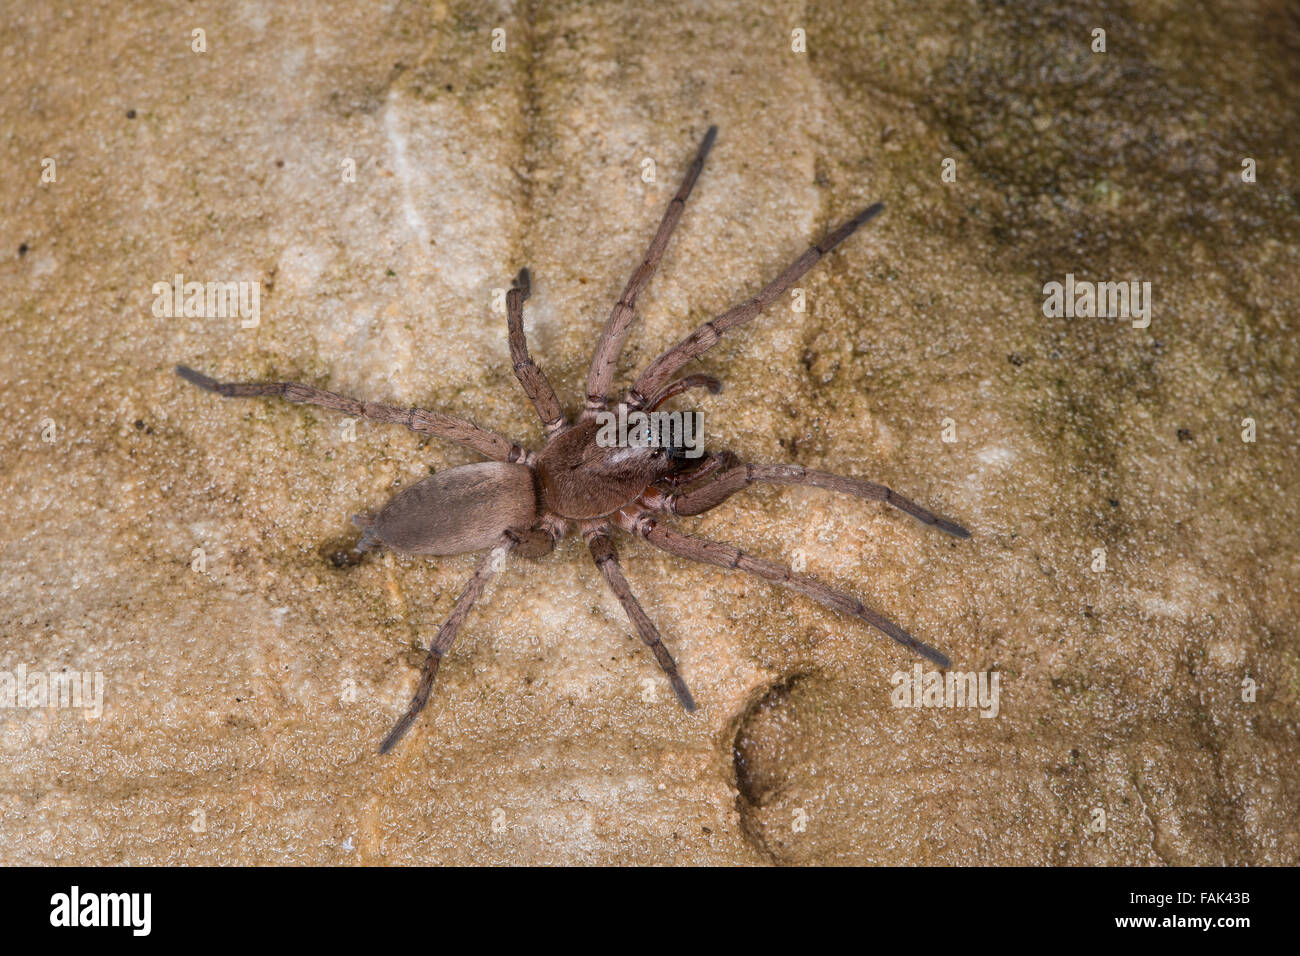 Massa spider, Caccia spider, Plattbauchspinne, Plattbauch-Spinne, Glattbauchspinne, Drassodes sp., Gnaphosidae Foto Stock